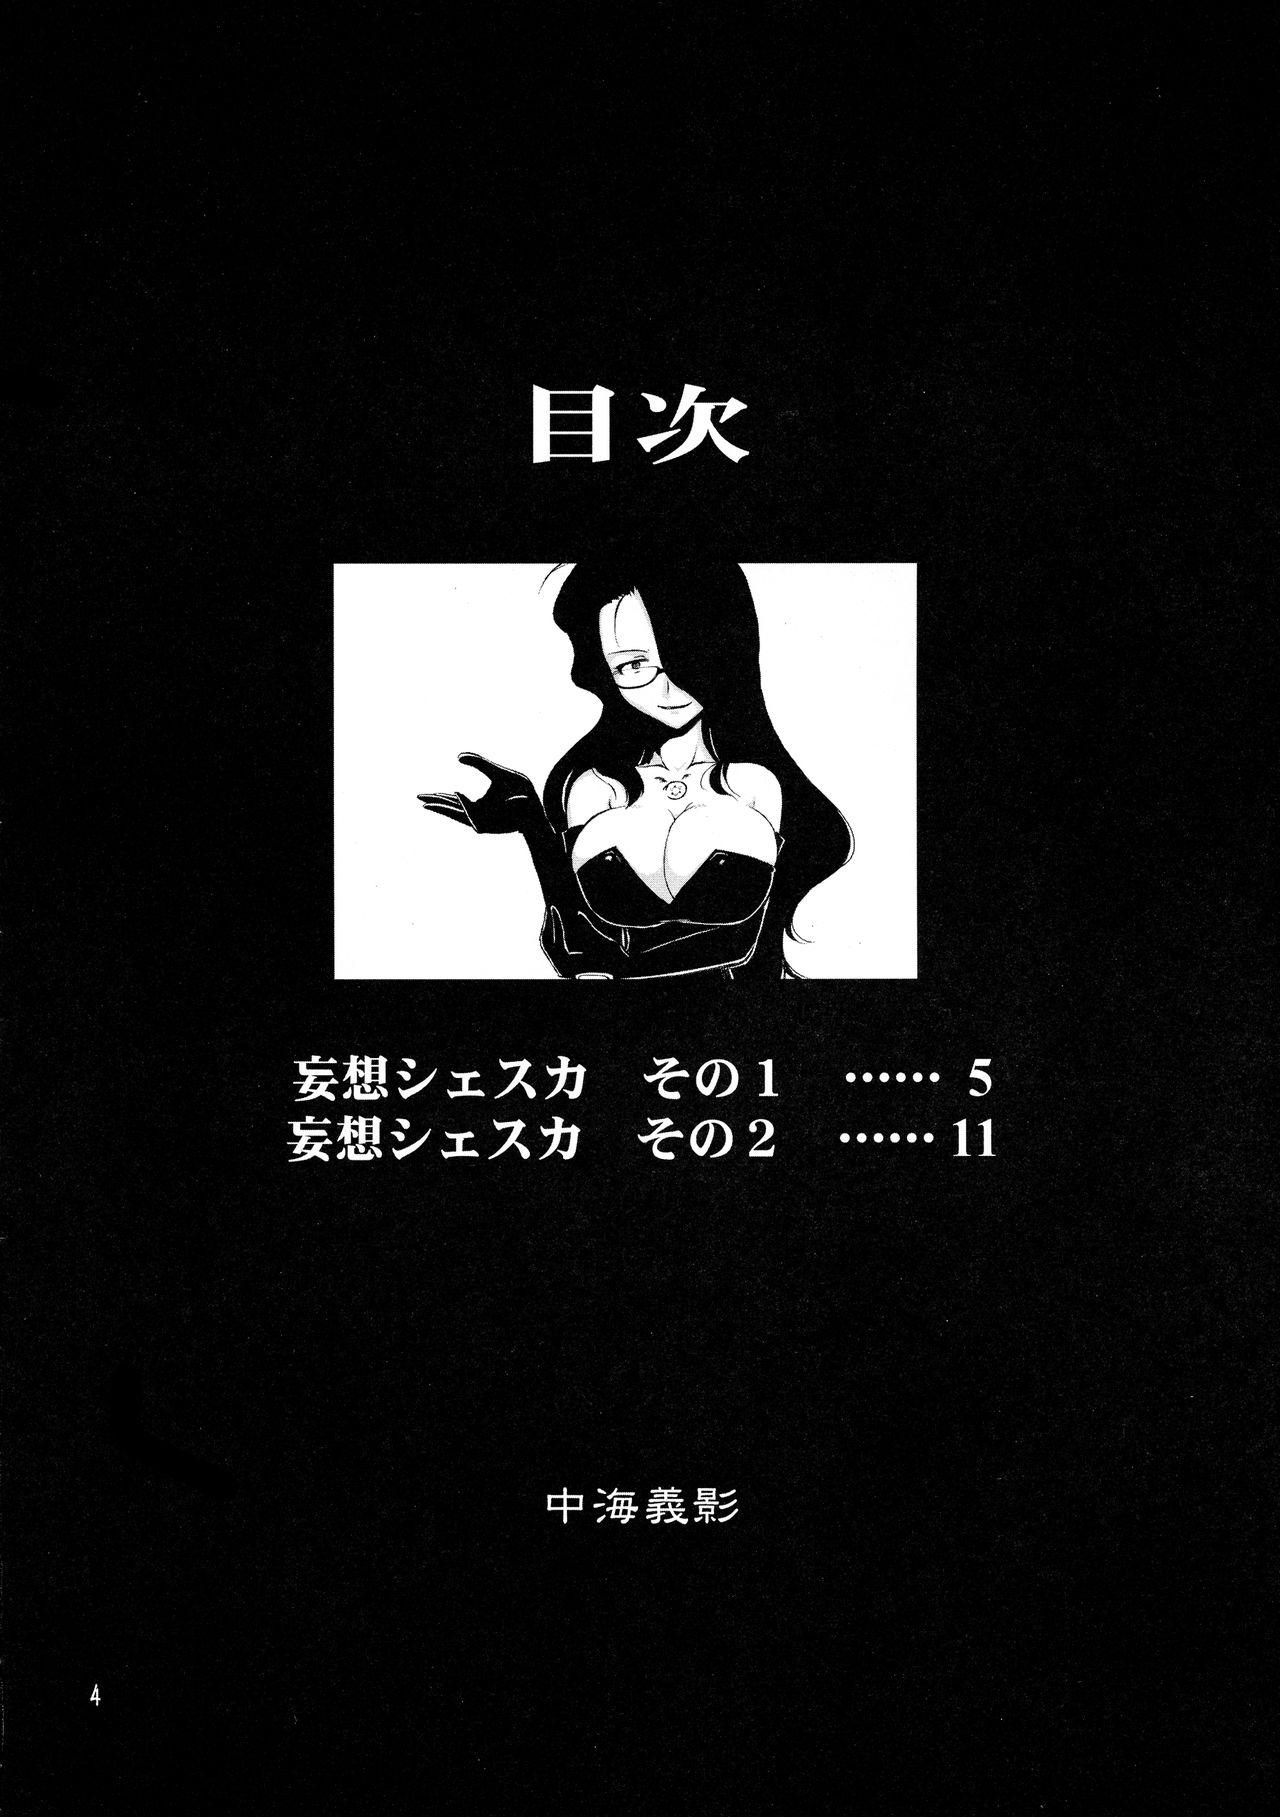 Young Tits Megane Plus 2 - Fullmetal alchemist Pick Up - Page 4